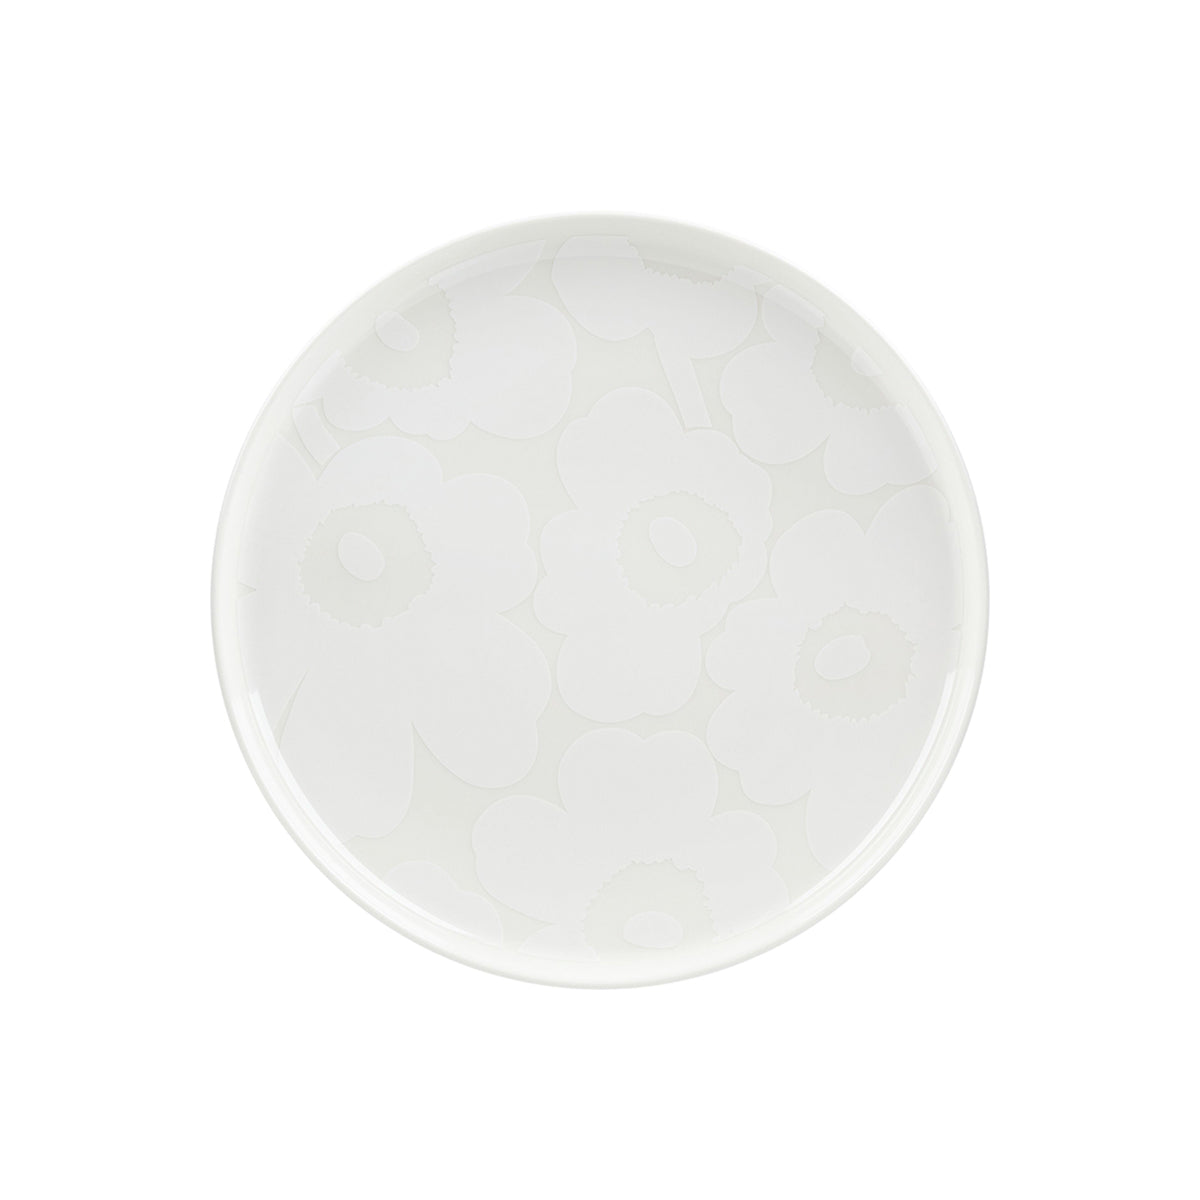 Unikko Plate White on White 25 cm